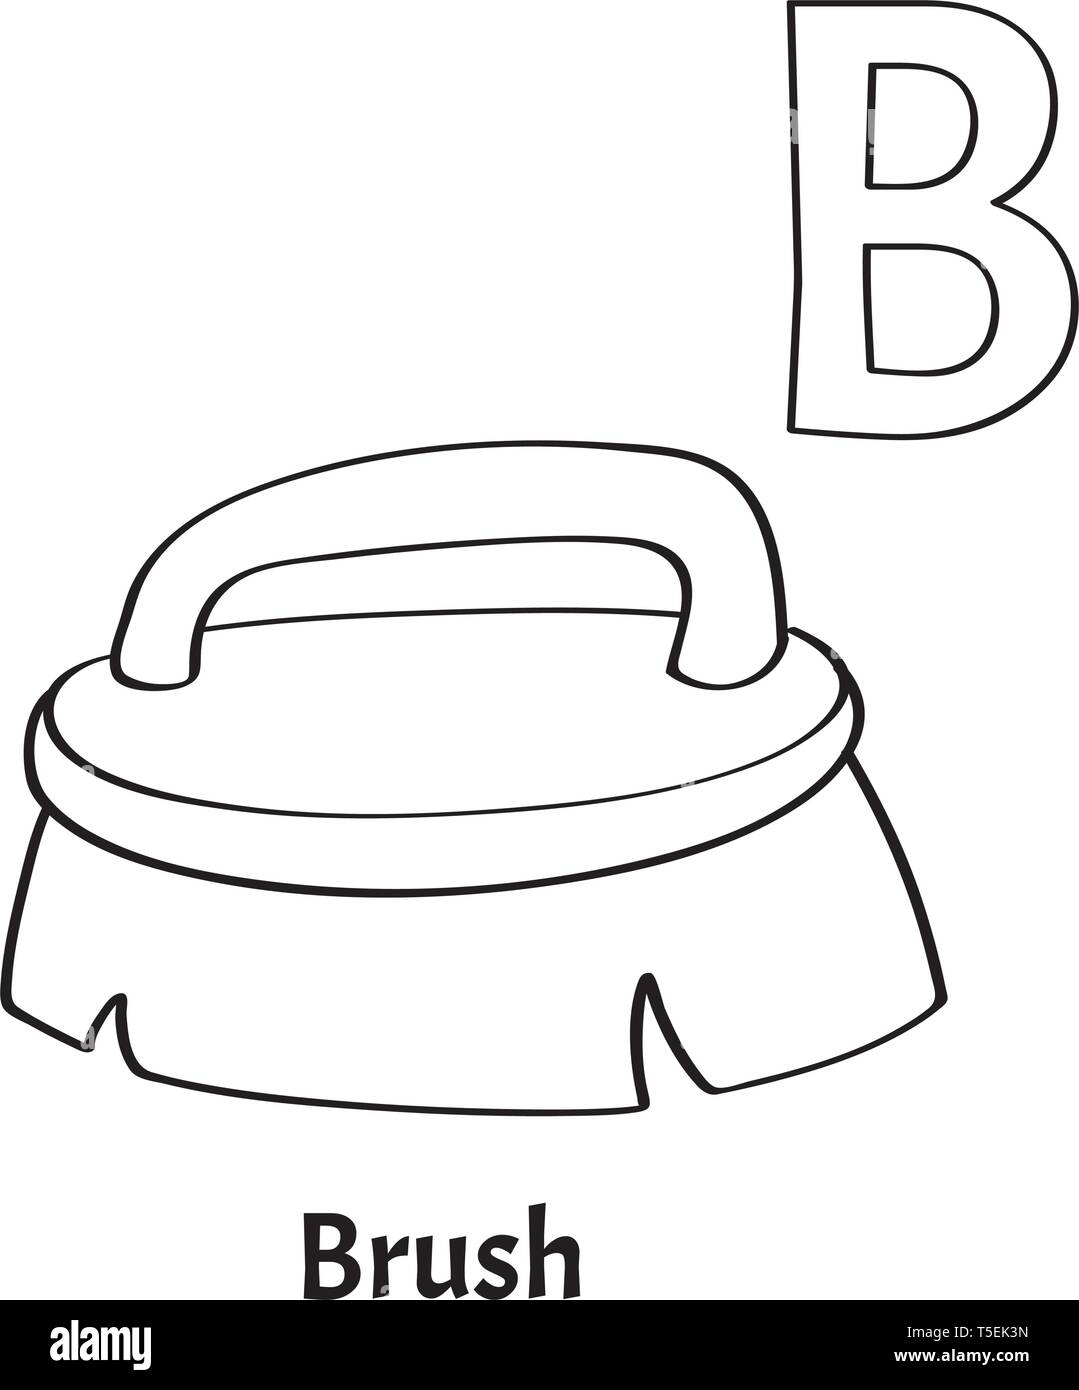 vector alphabet letter b coloring page brush T5EK3N